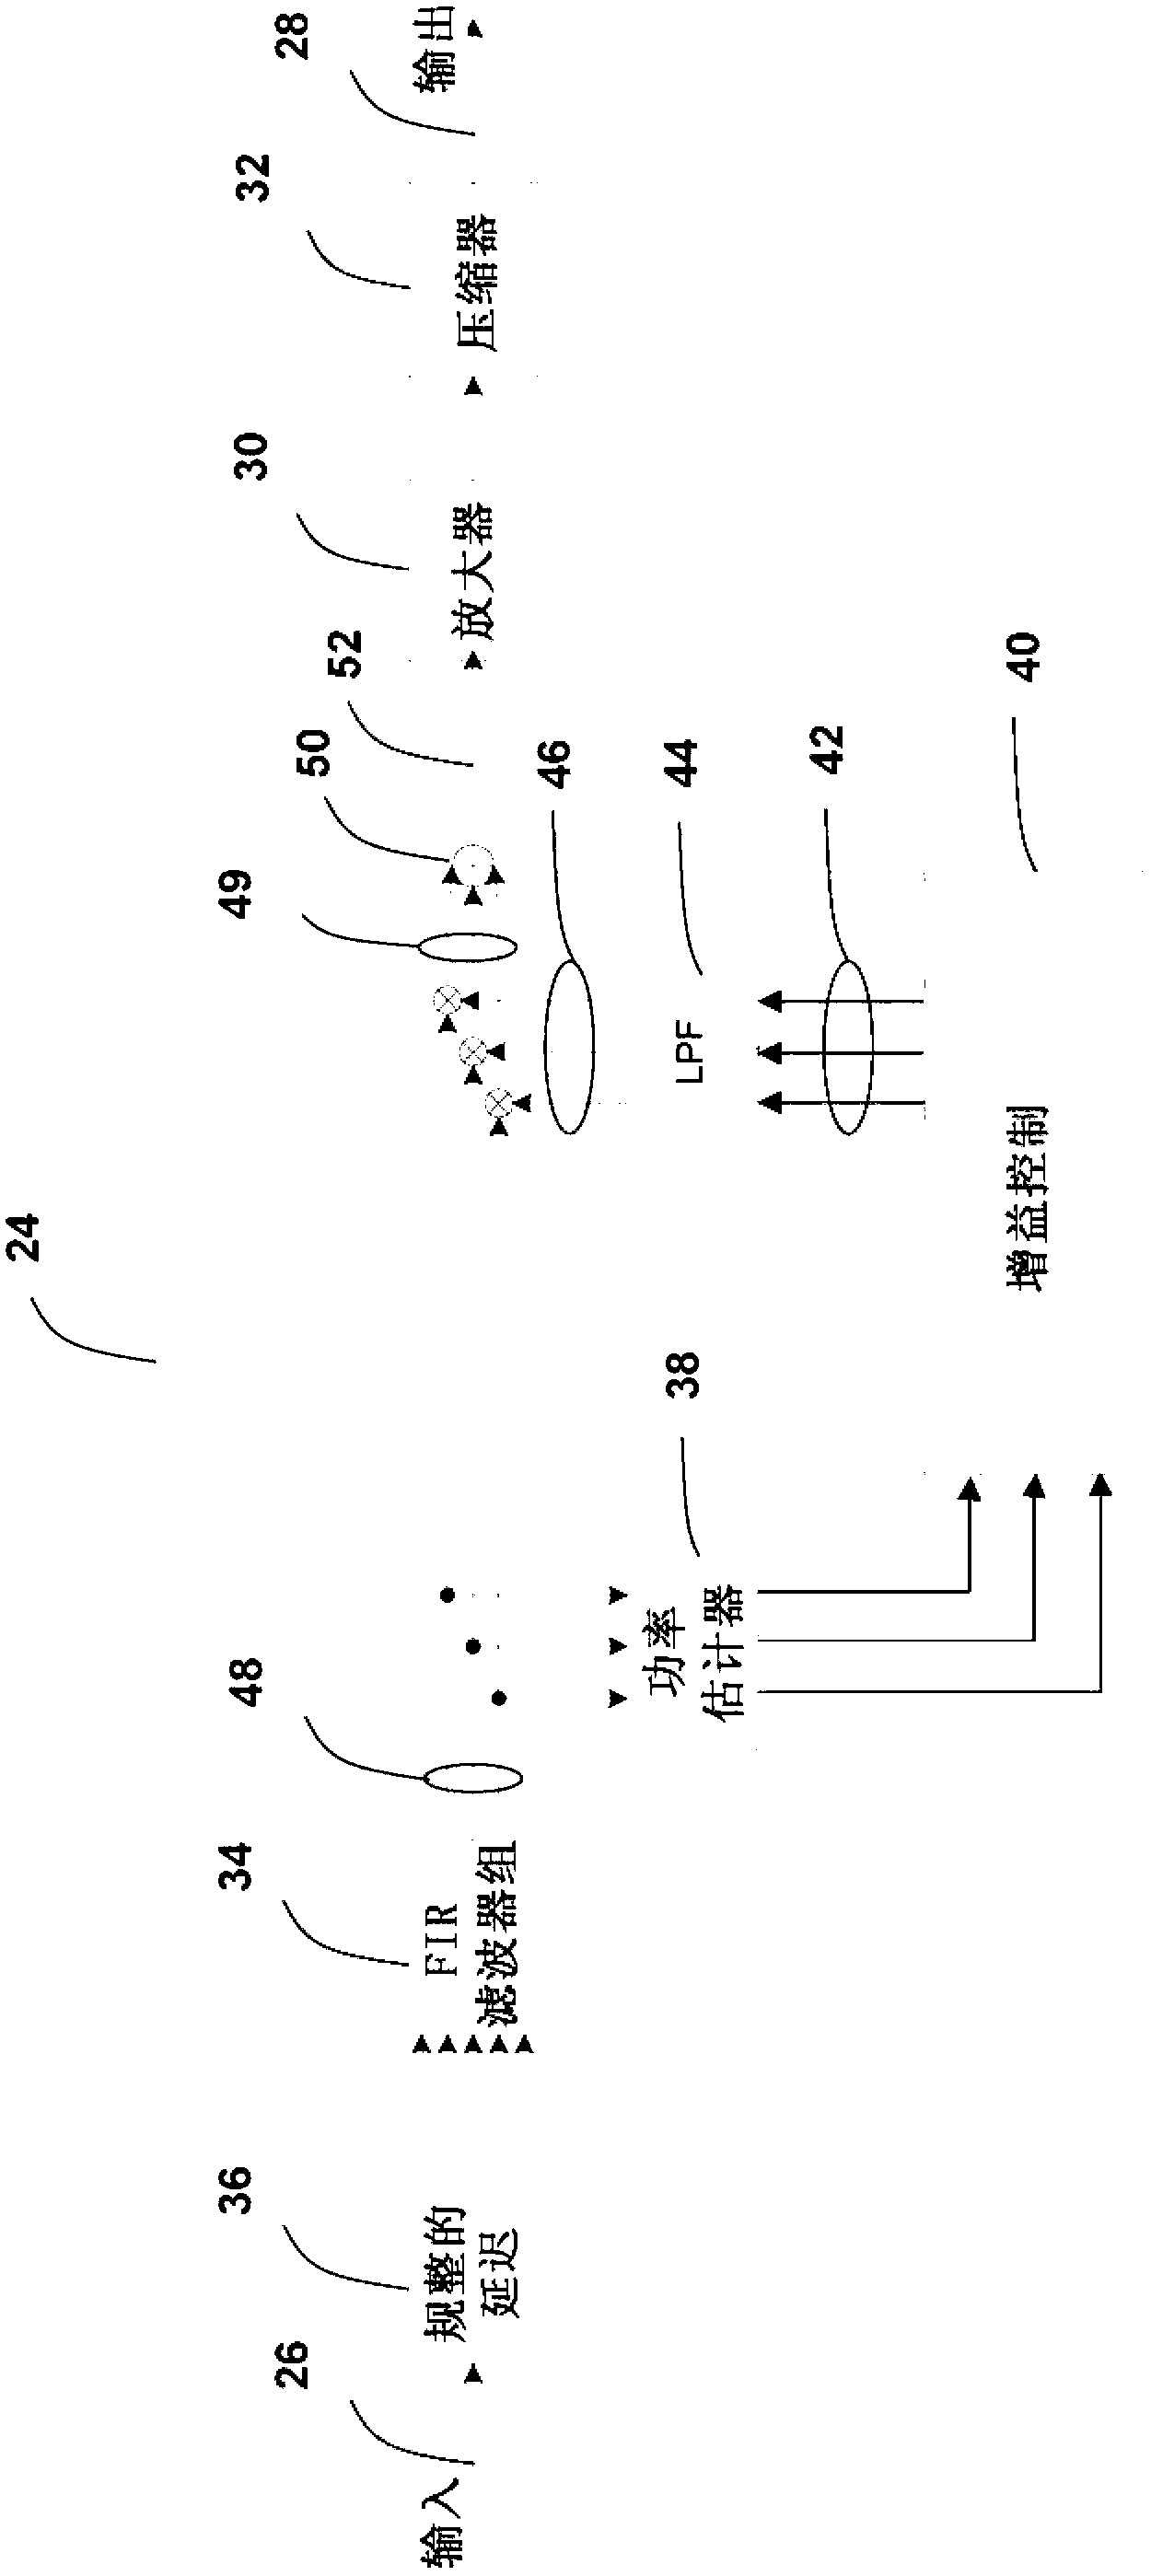 Binaural compressor preserving directional cues